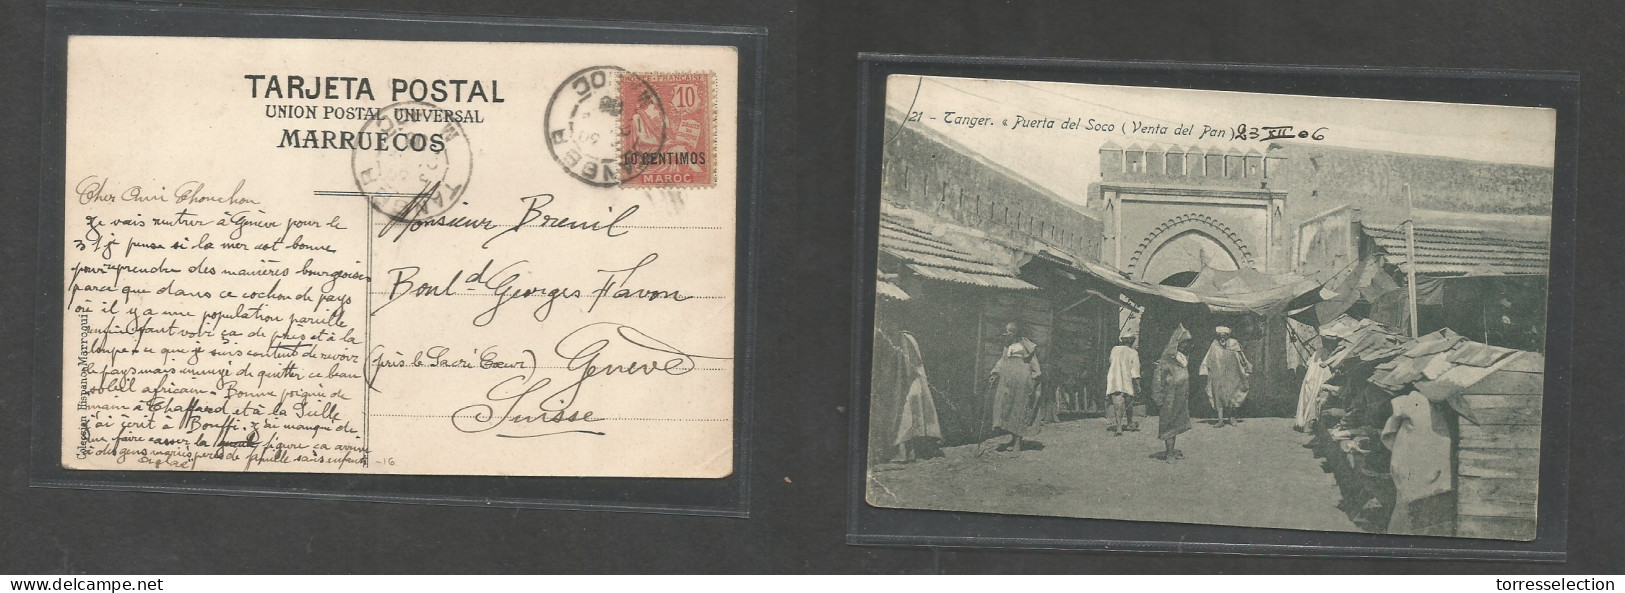 MARRUECOS - French. 1906. Tanger - Switzerland, Geneva. Fkd Ppc. Spanish Currency 10c Ovptd Red, Tied Cds. Fine. SALE. - Marruecos (1956-...)